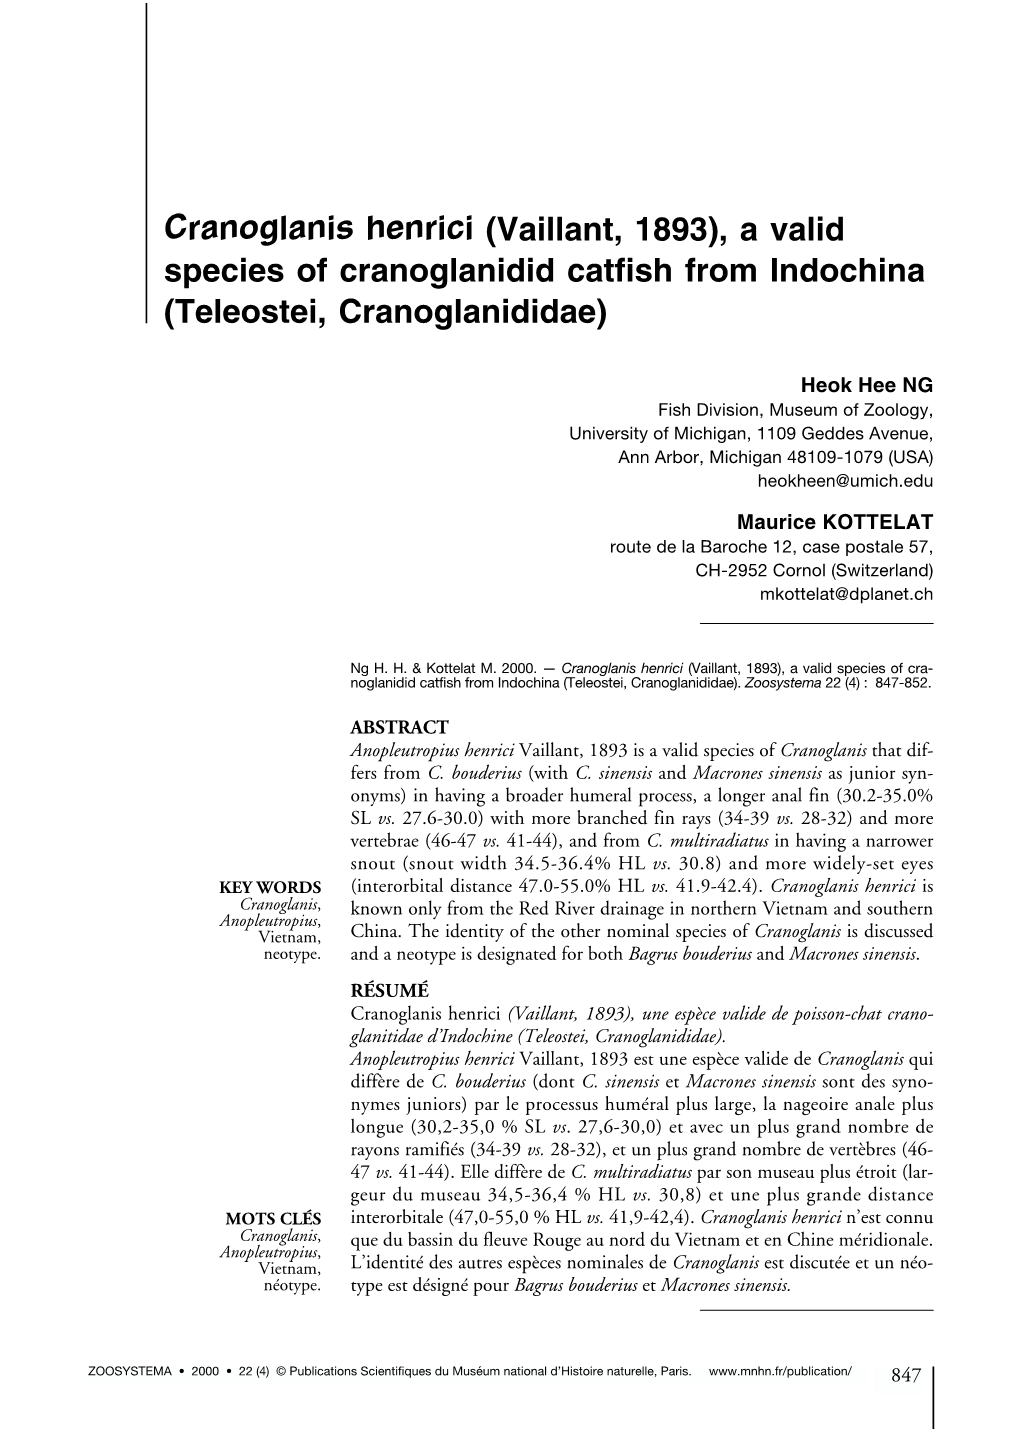 Cranoglanis Henrici (Vaillant, 1893), a Valid Species of Cranoglanidid Catfish from Indochina (Teleostei, Cranoglanididae)